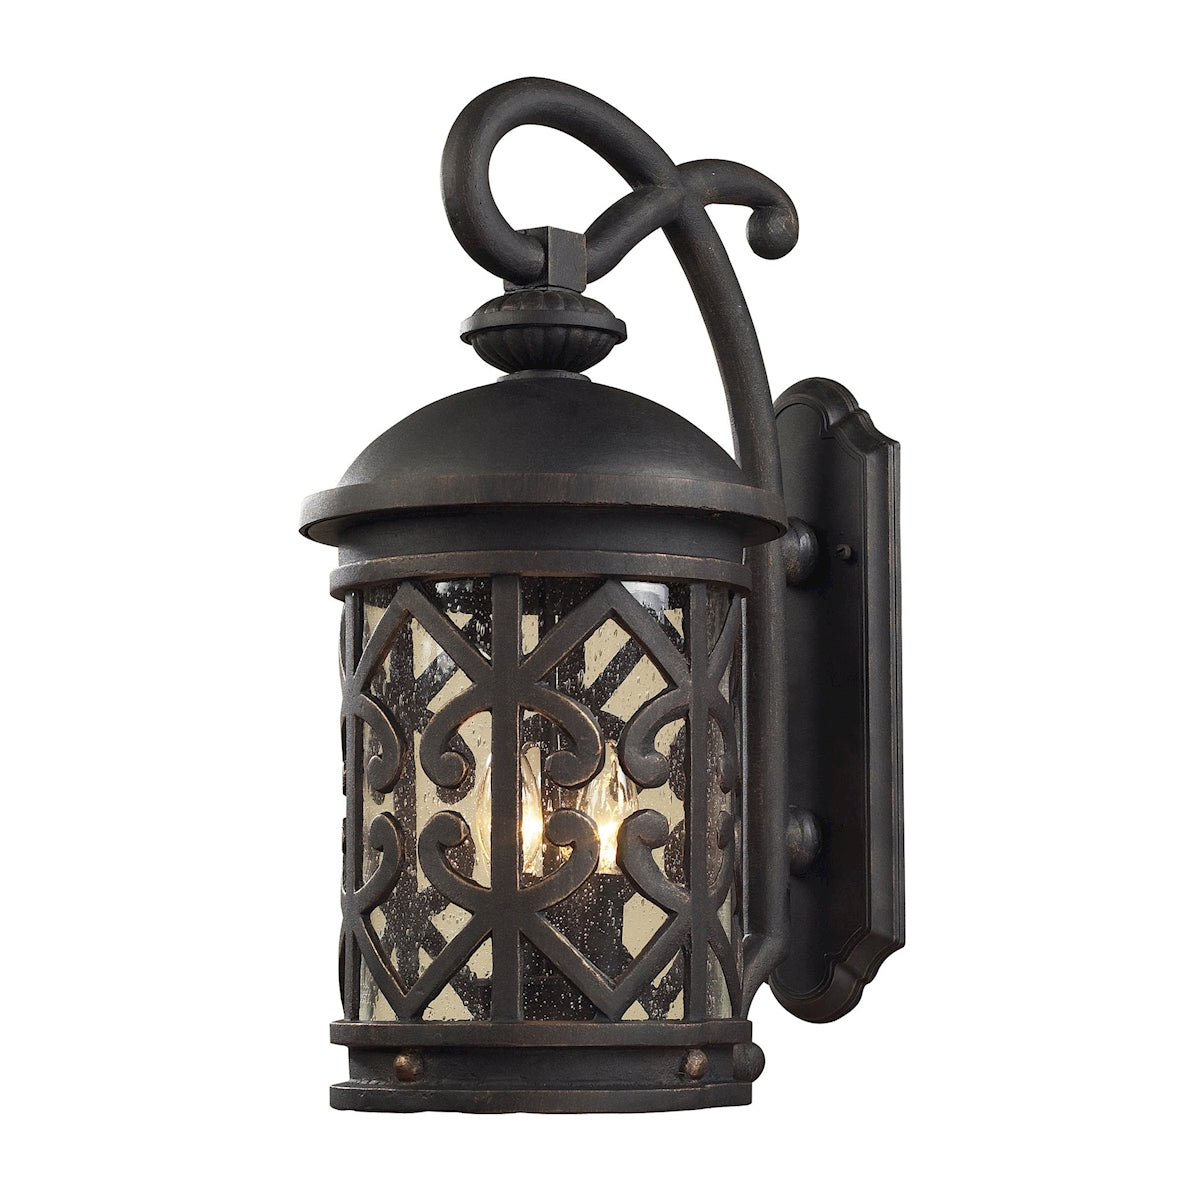 ELK Lighting 42061/2 Tuscany Coast 2-Light Outdoor Wall Lantern in Weathered Charcoal